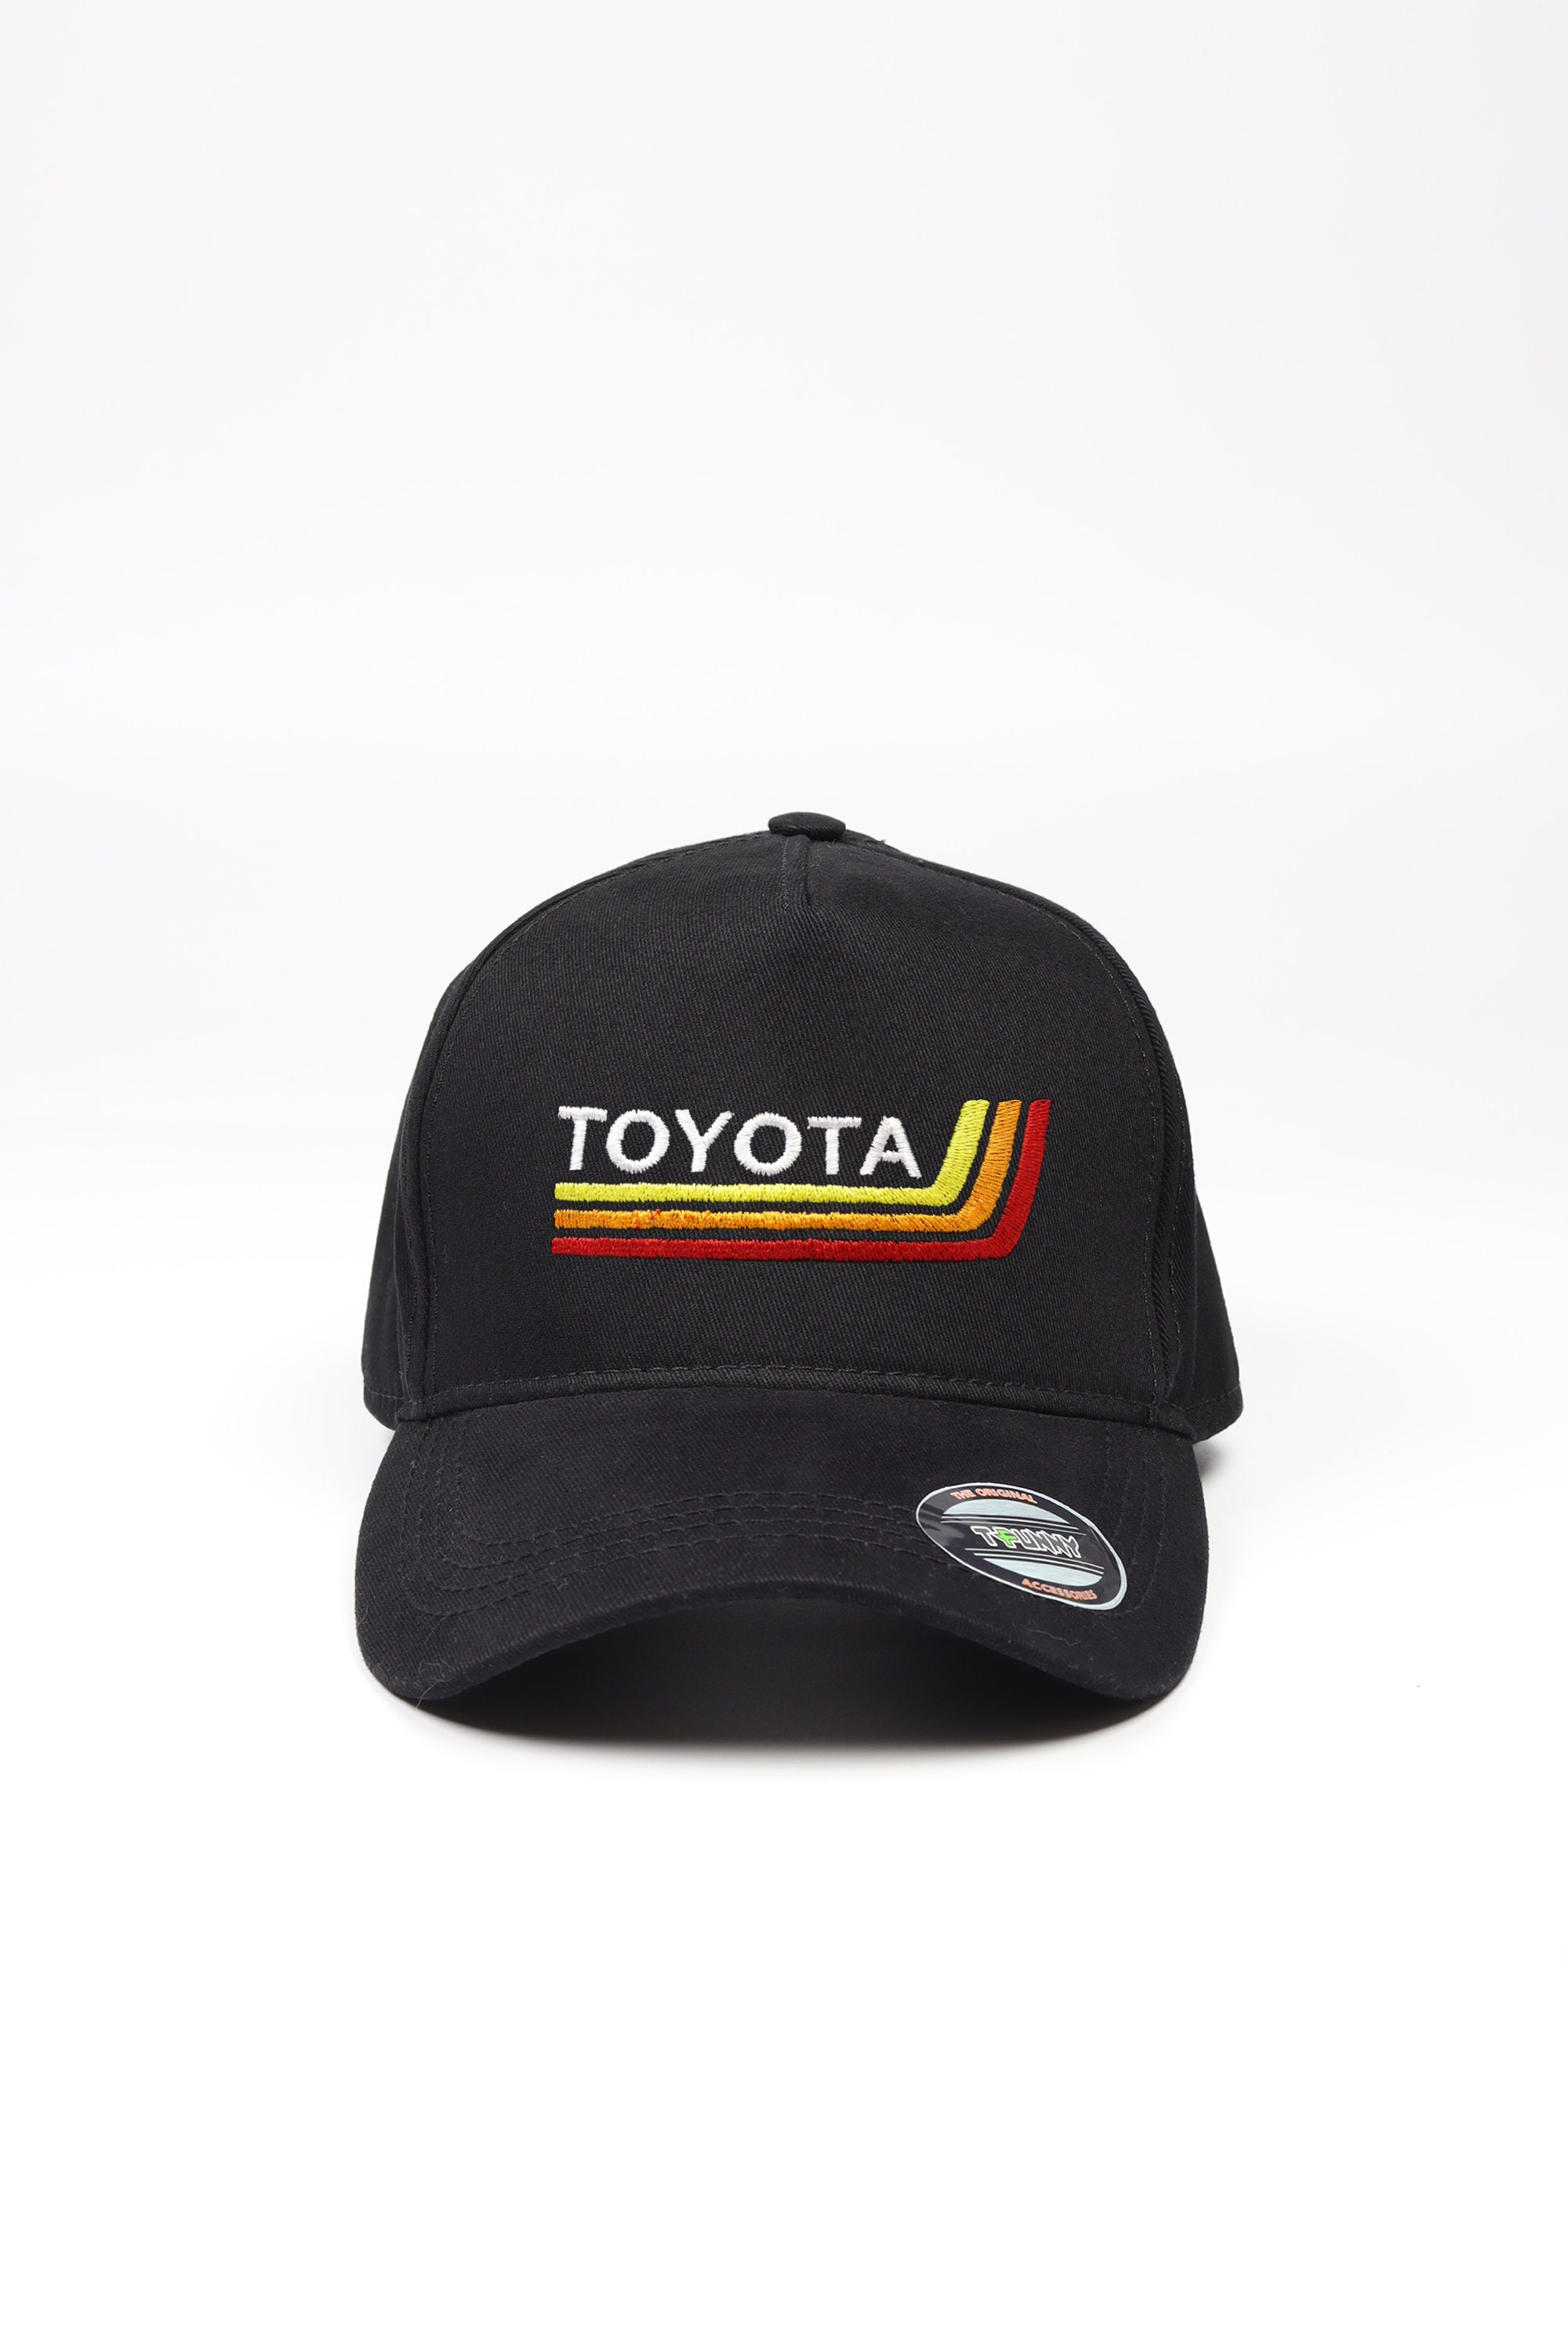 Toyota Hat 